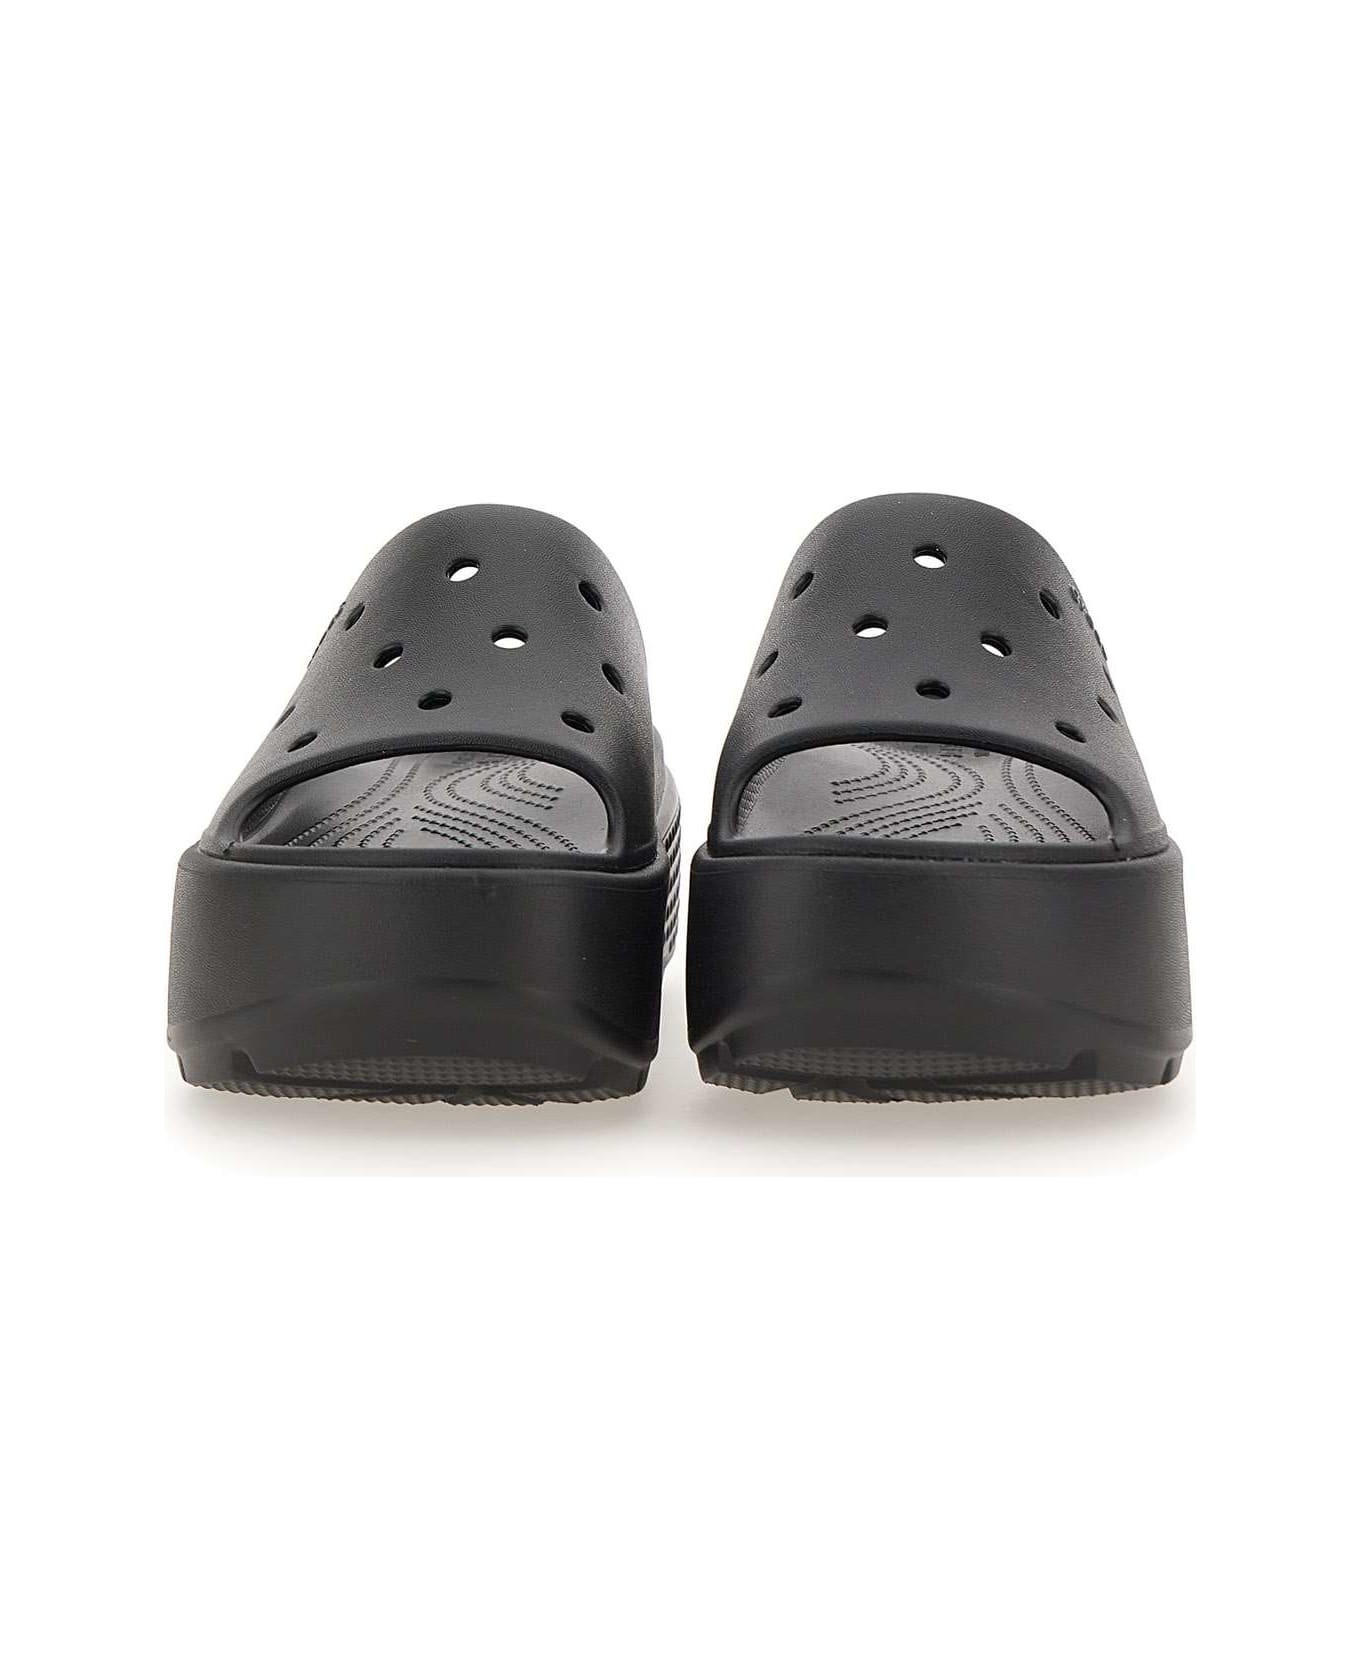 Crocs 'stomp Slide' Sandals - Black